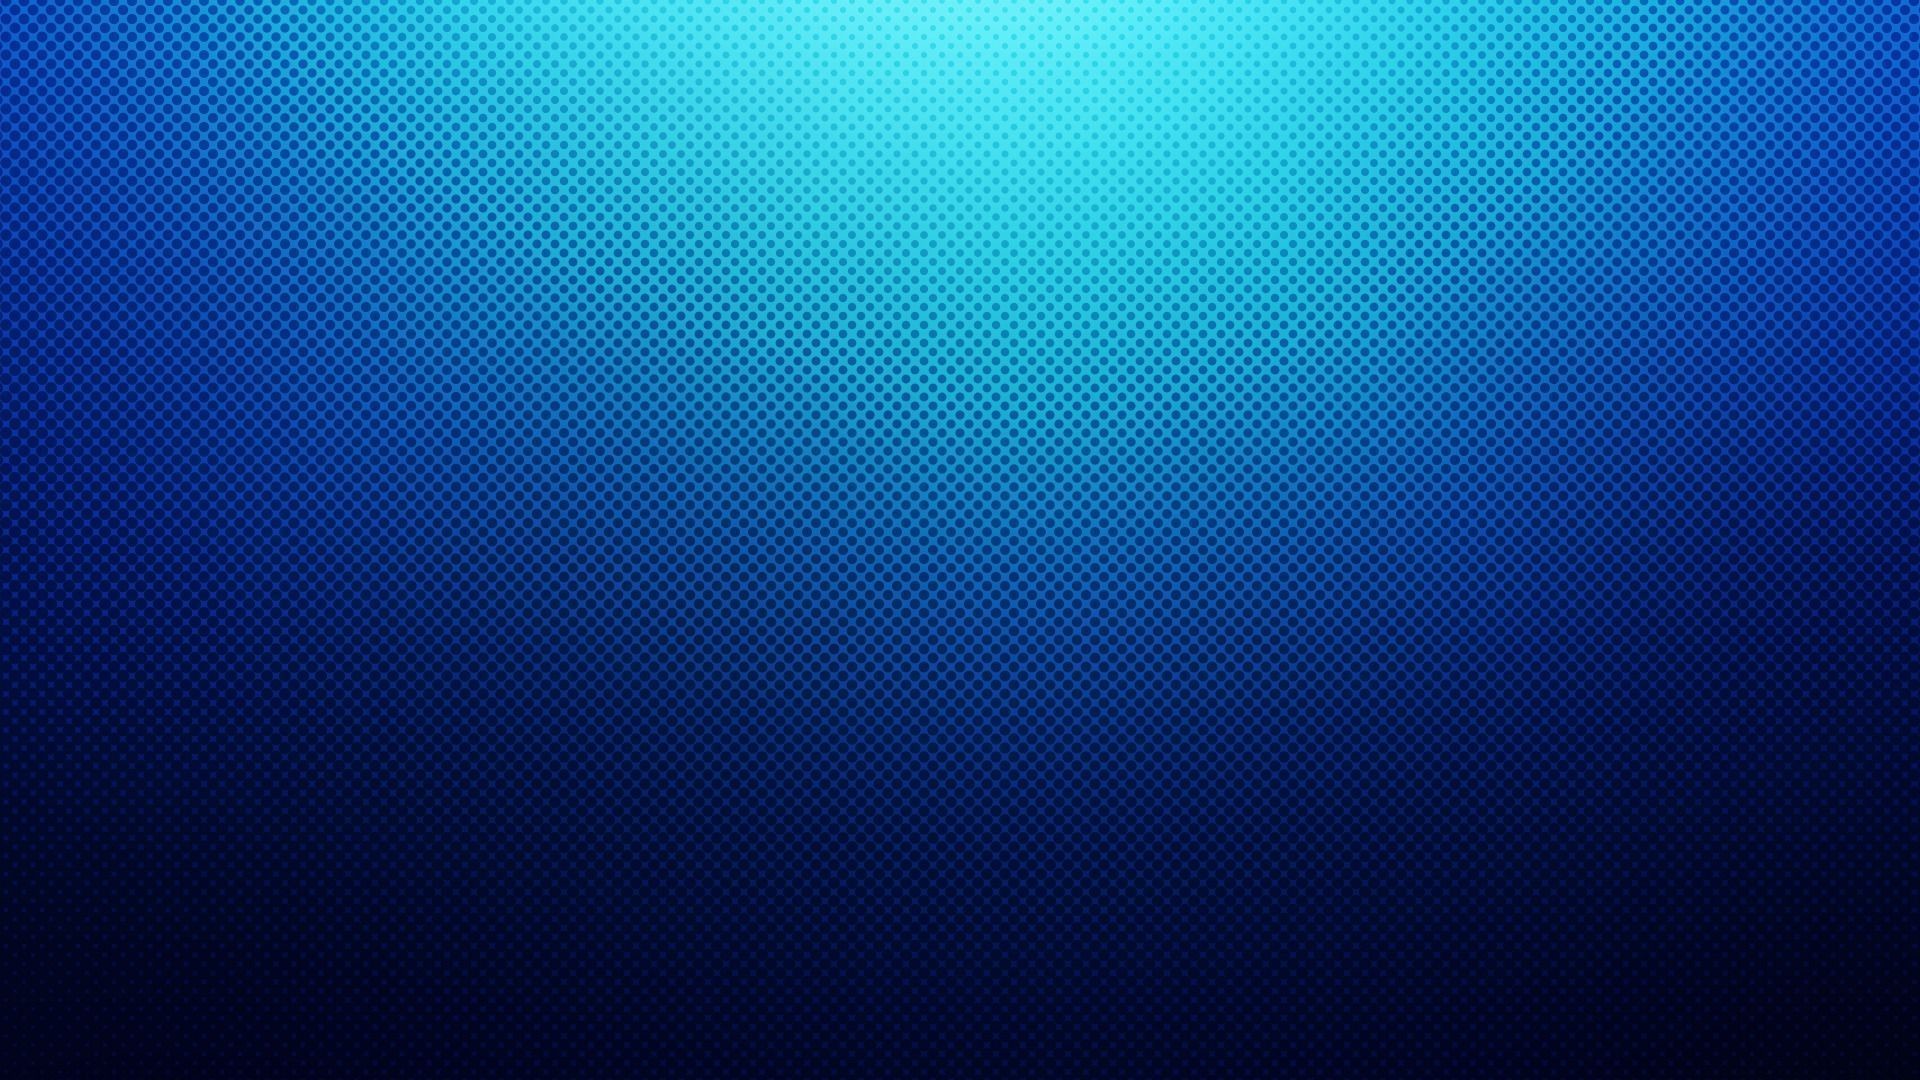 dark blue abstract background